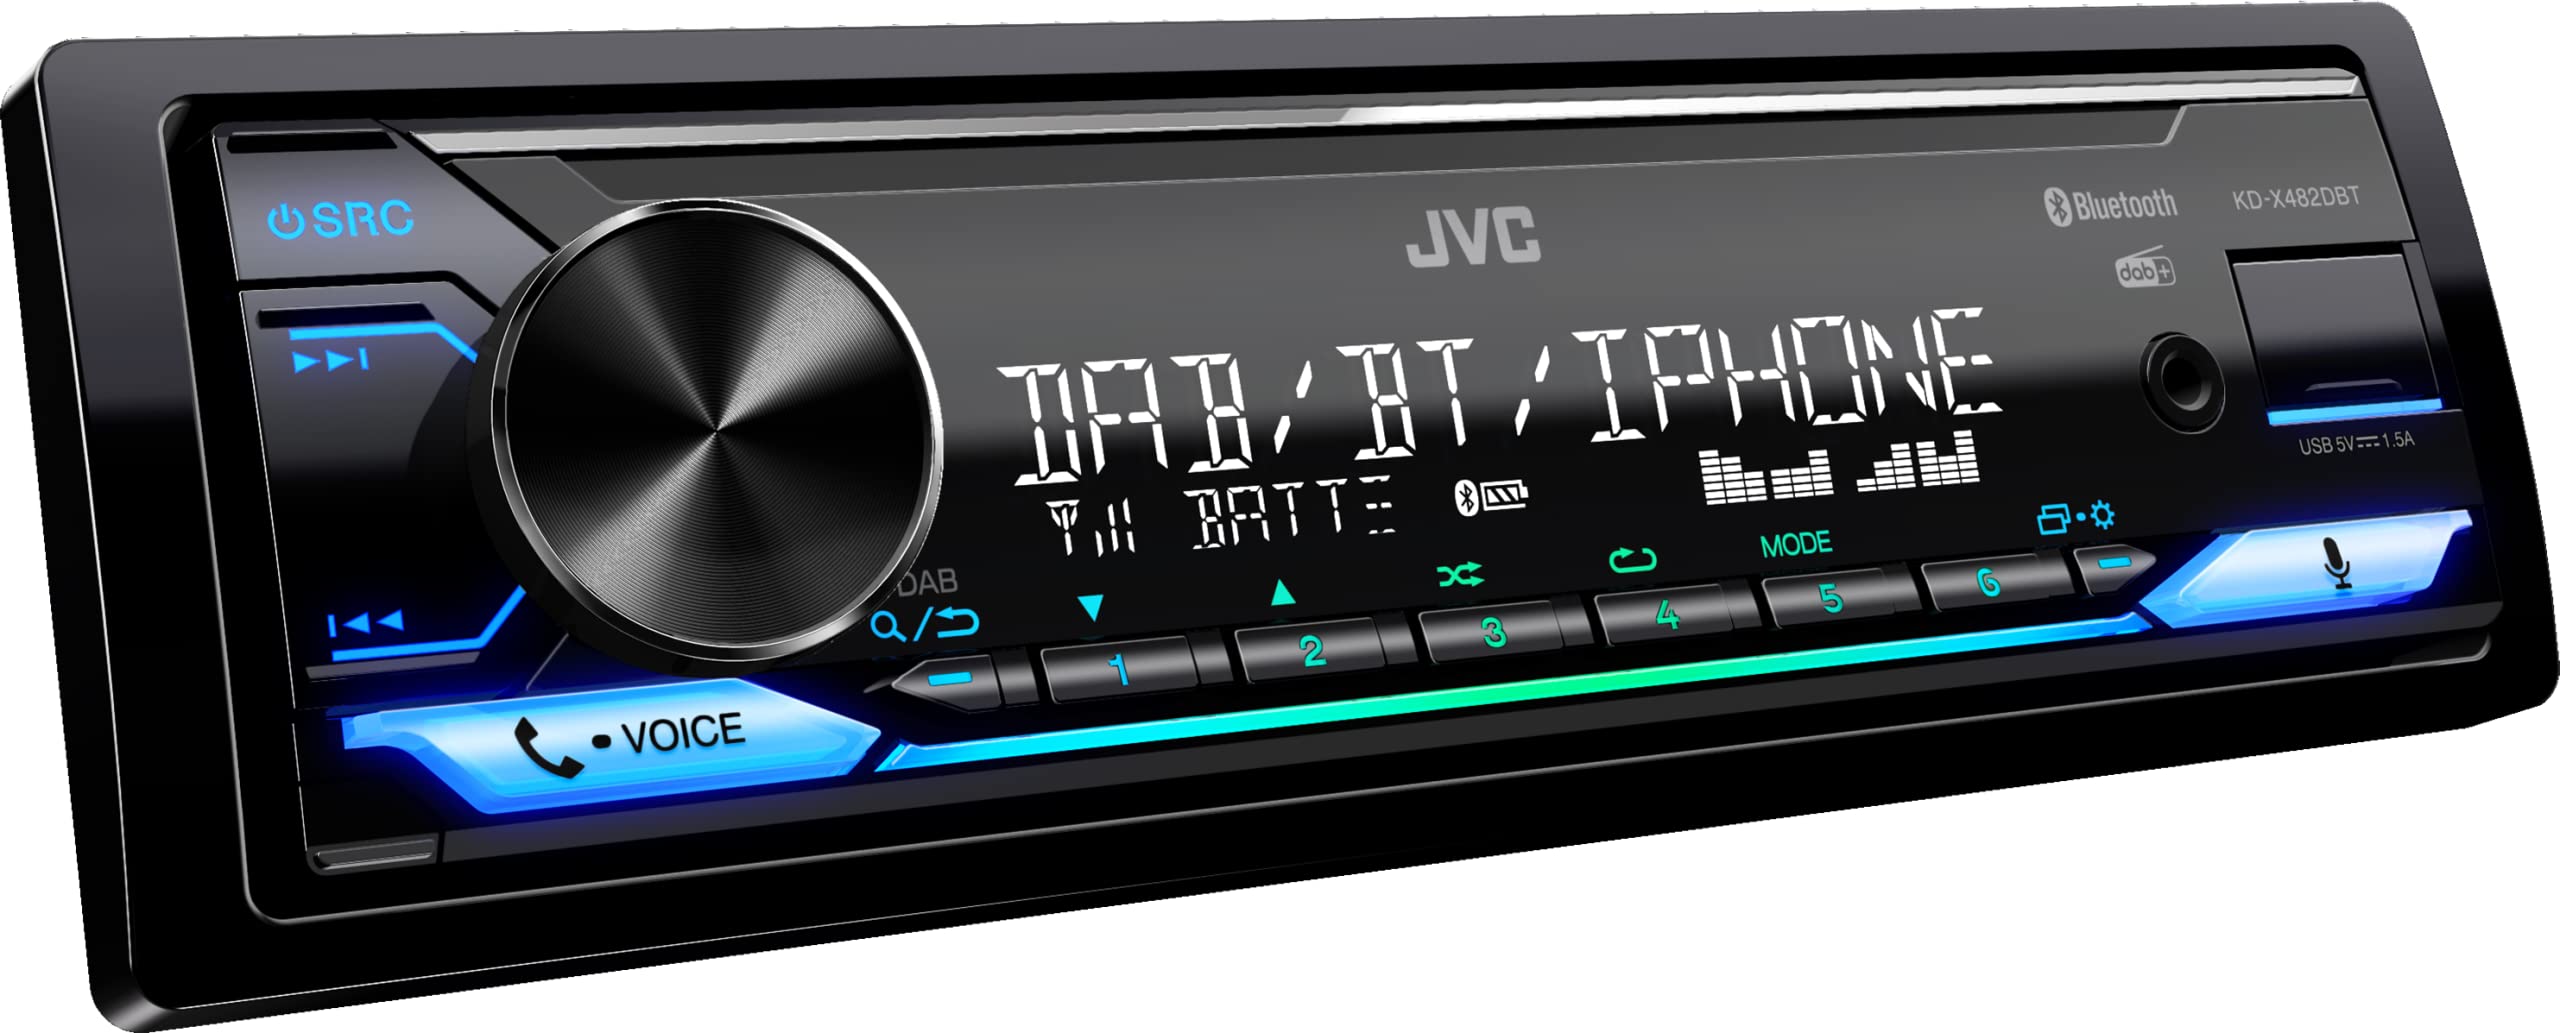 JVC KD-X482DBT USB-Autoradio mit DAB+ & Bluetooth Freisprecheinrichtung (USB, AUX-In, 3 x Pre-Out 2, 5V, Amazon Alexa, Soundprozessor, 4x50 W, VAR. Beleuchtung), Schwarz